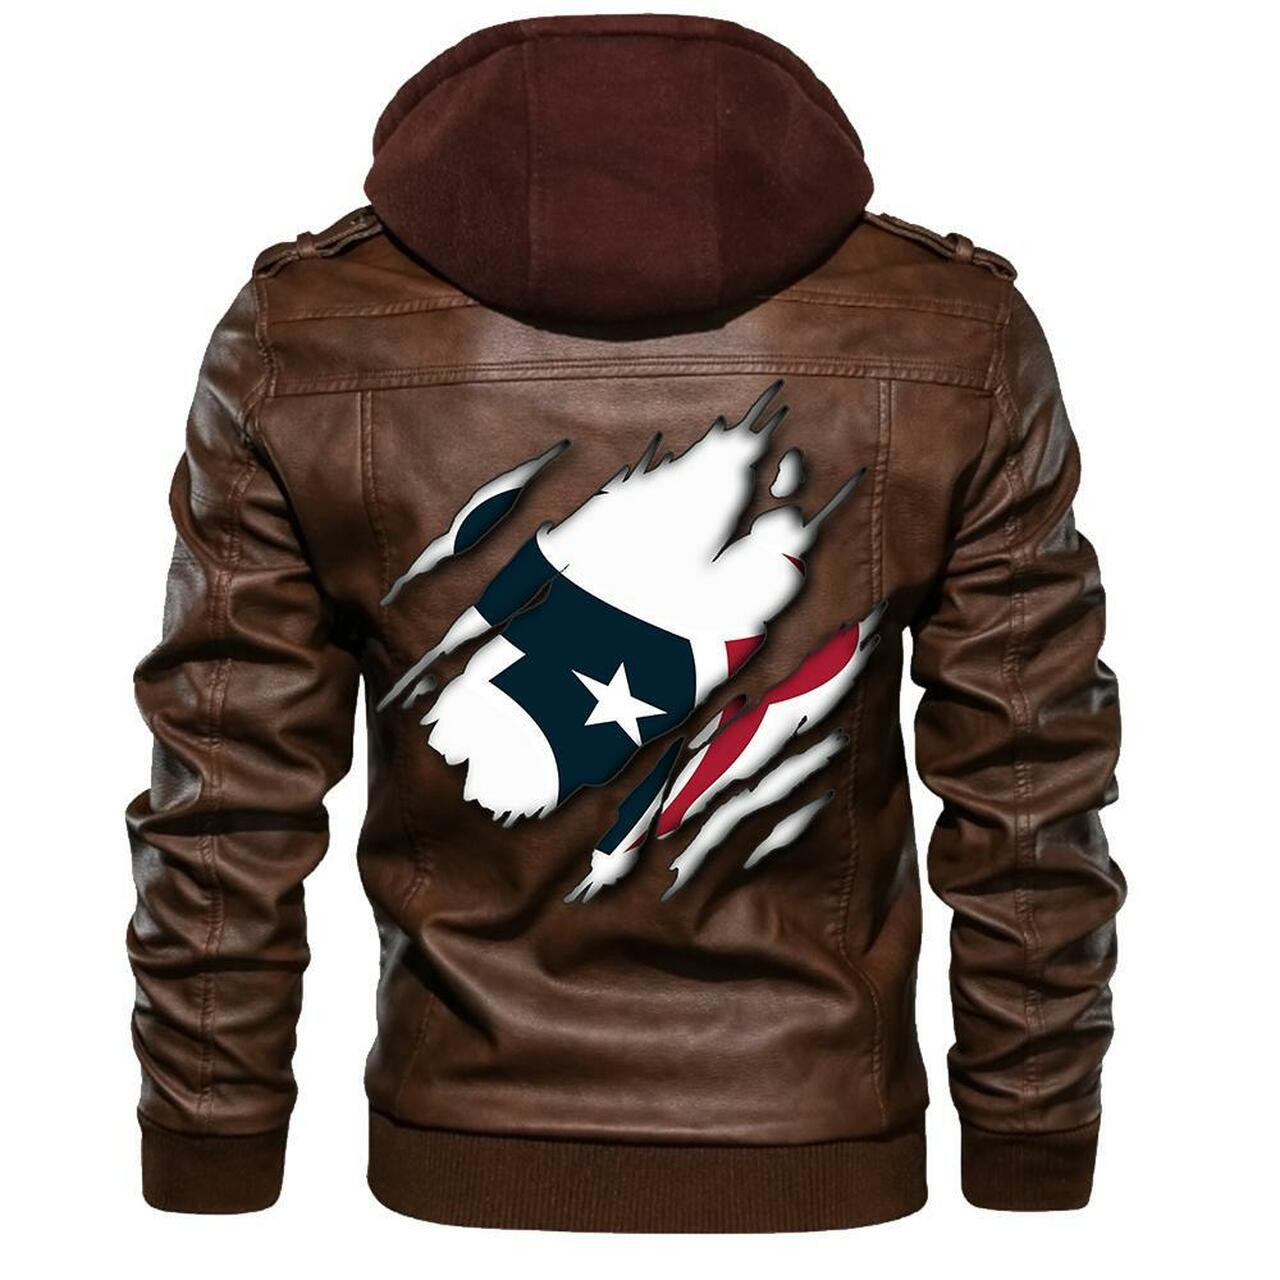 Top leather jacket Sells Best on Techcomshop 136